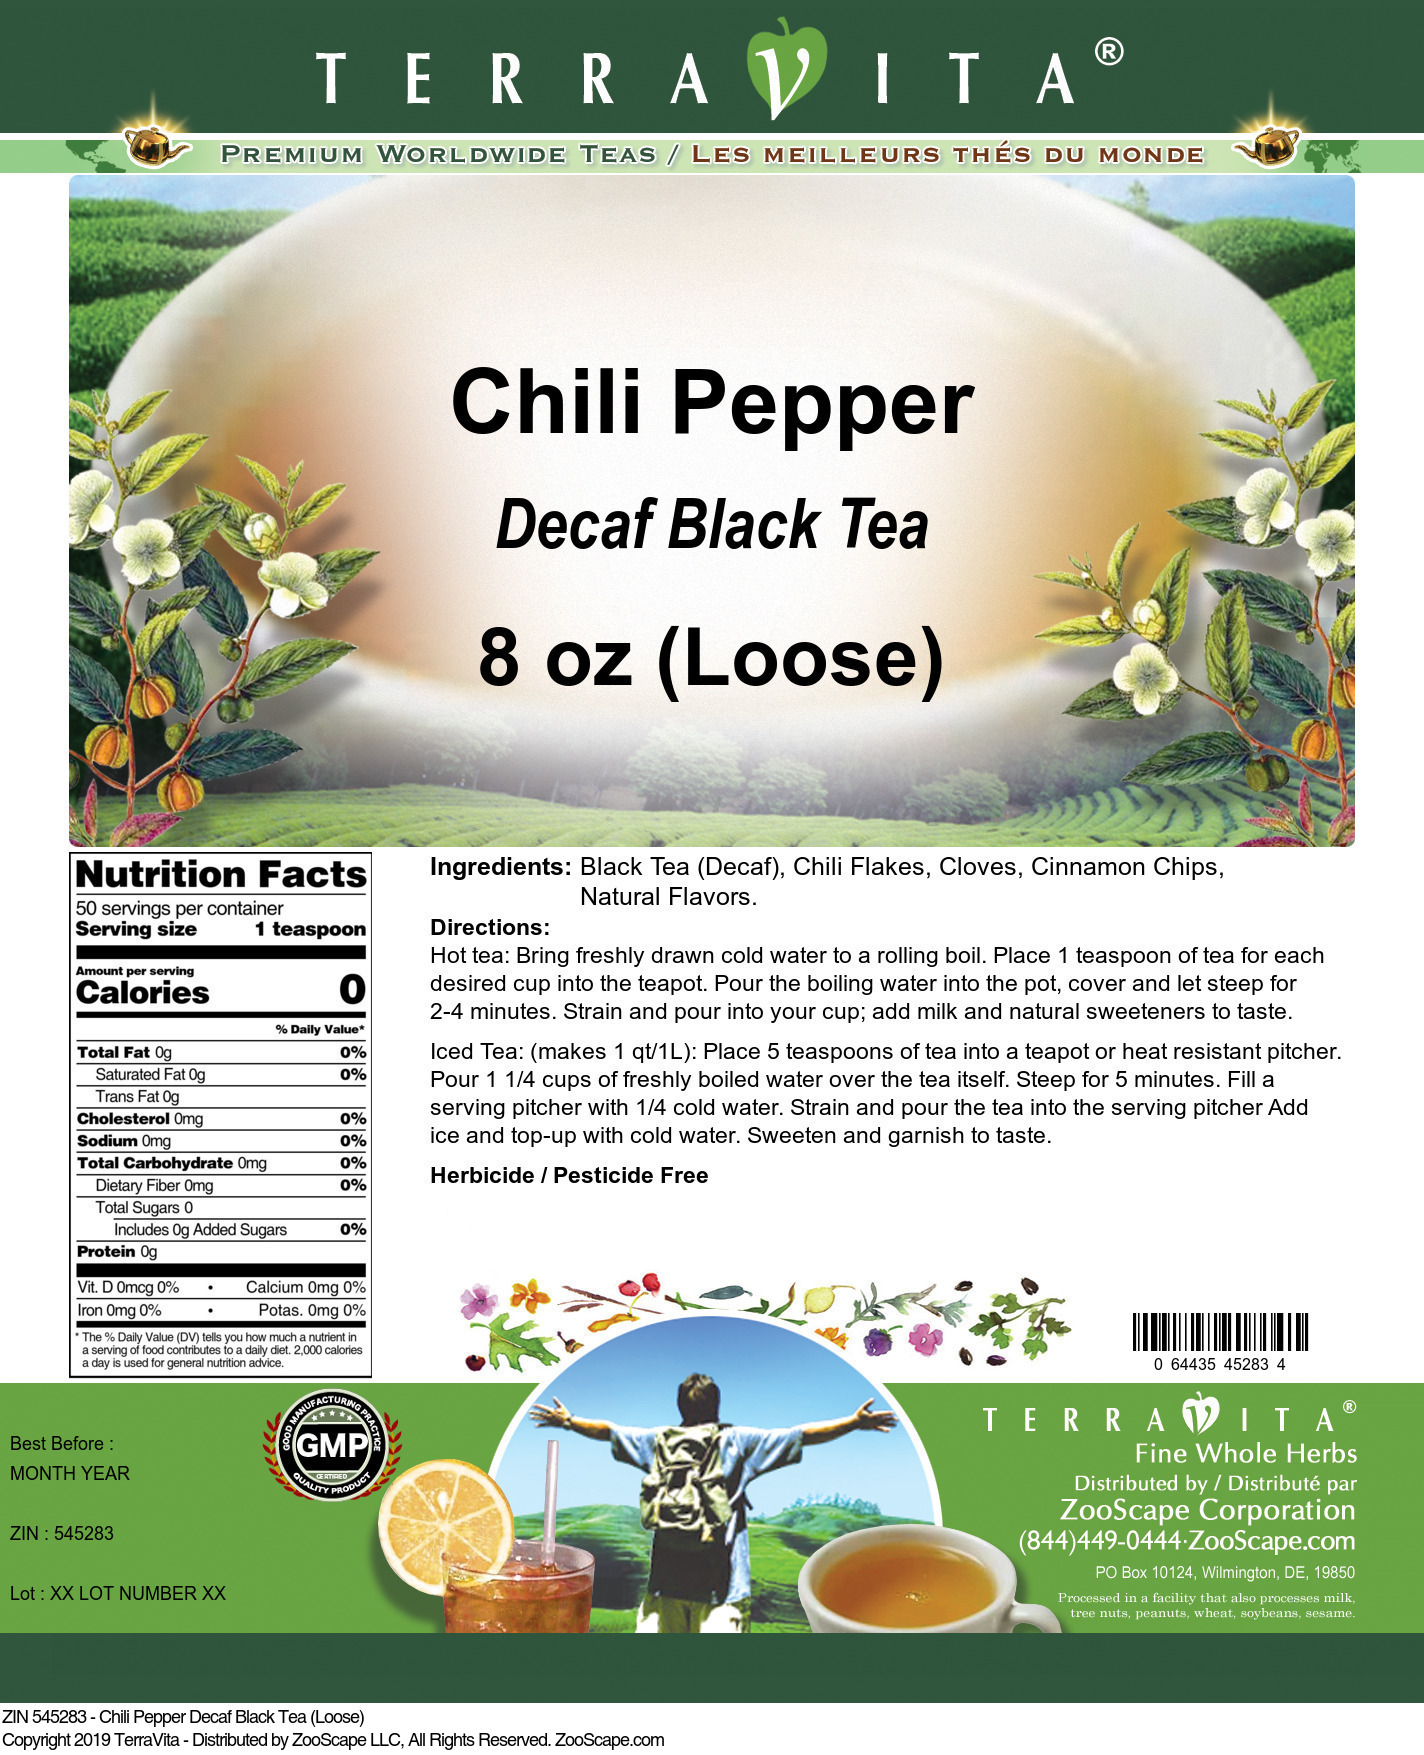 Chili Pepper Decaf Black Tea (Loose) - Label